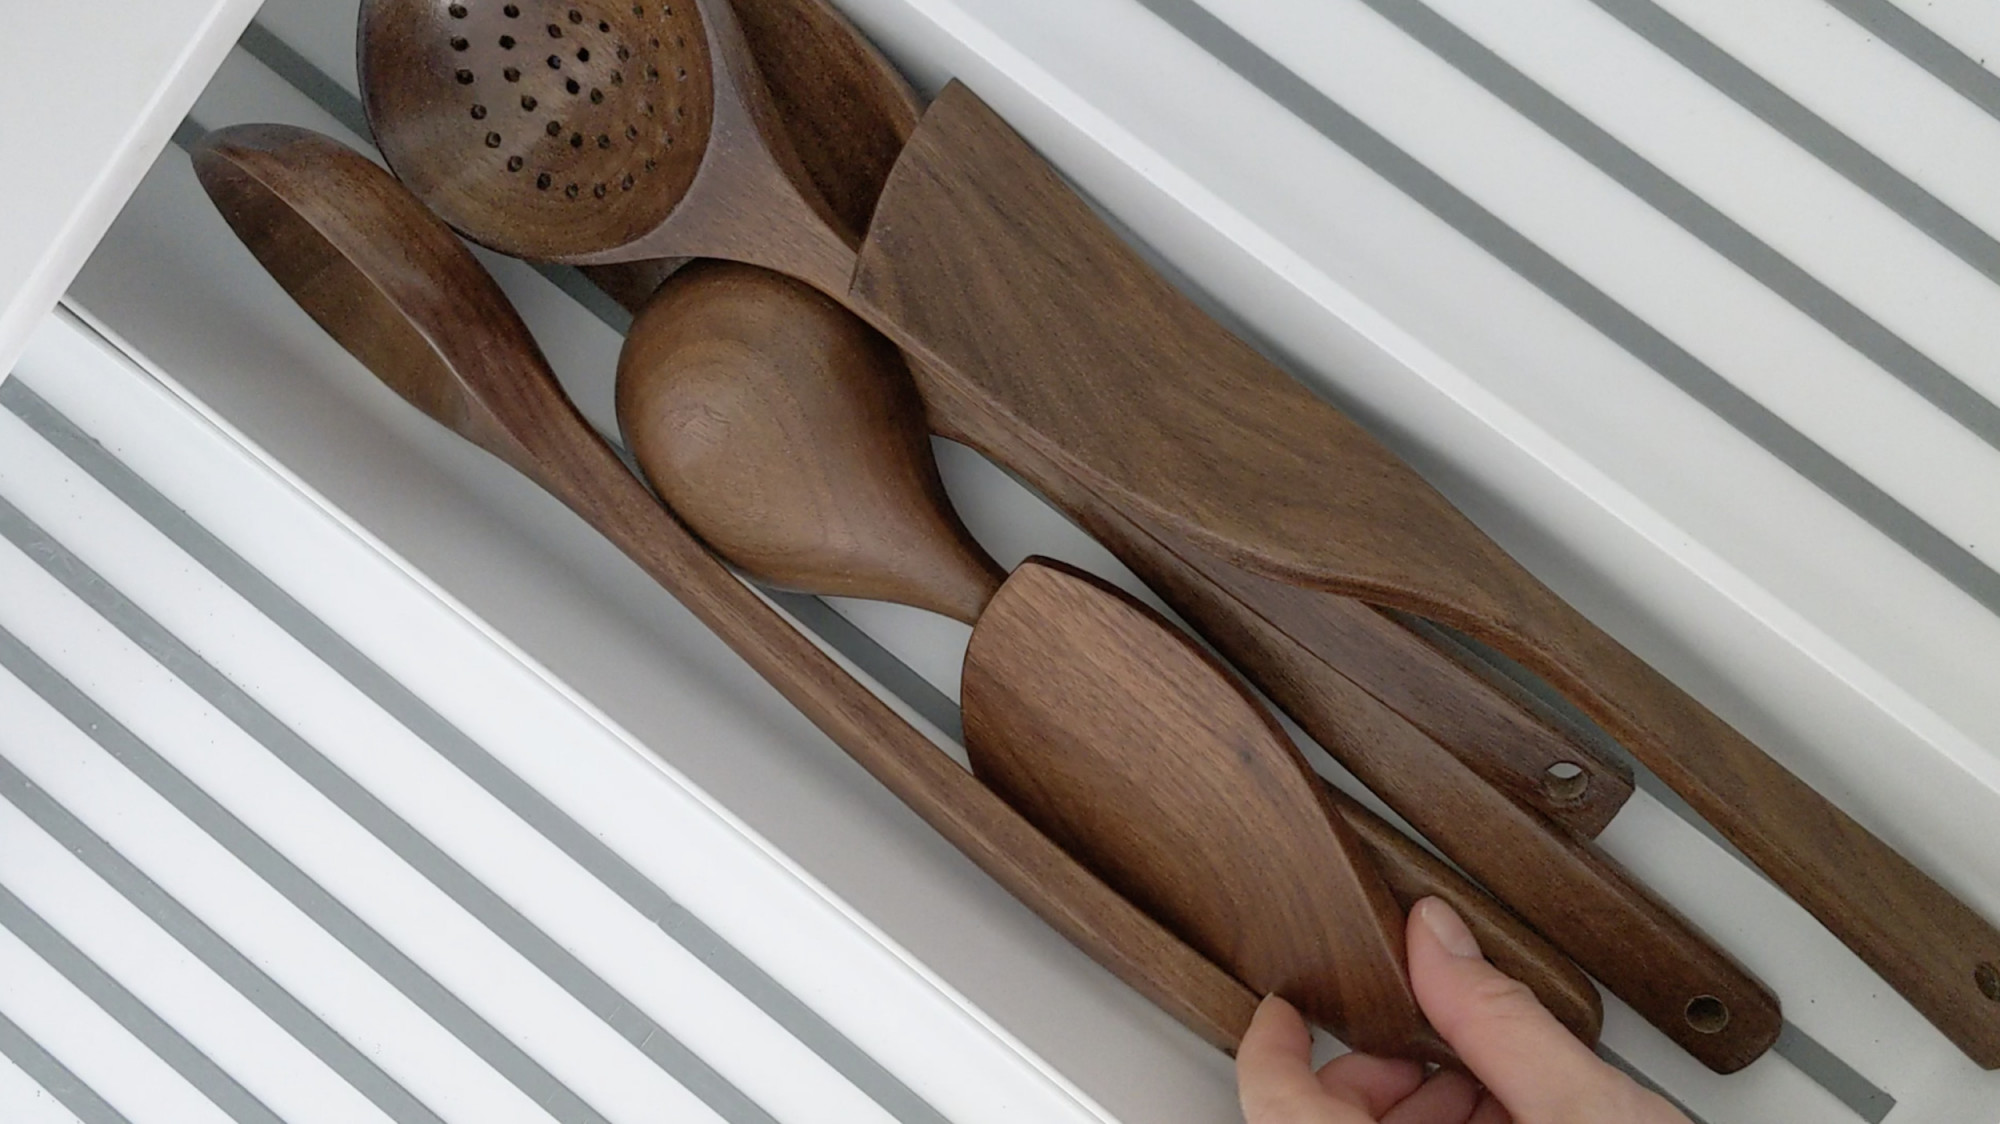 video_utensils_dark_wood_handcrafted